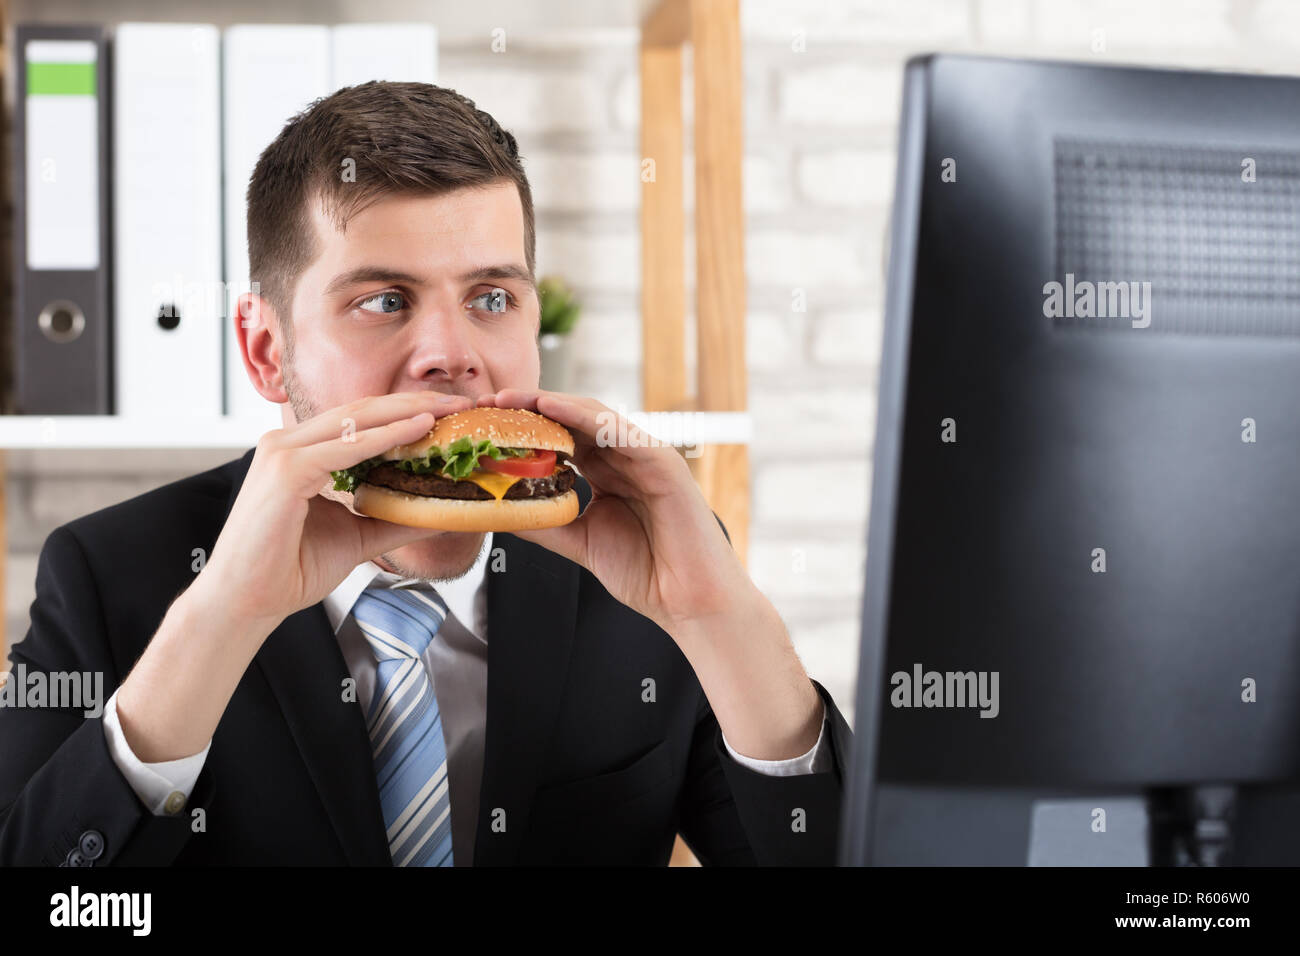 Business Man Eating Burger While Looking At Computer Stock Photo